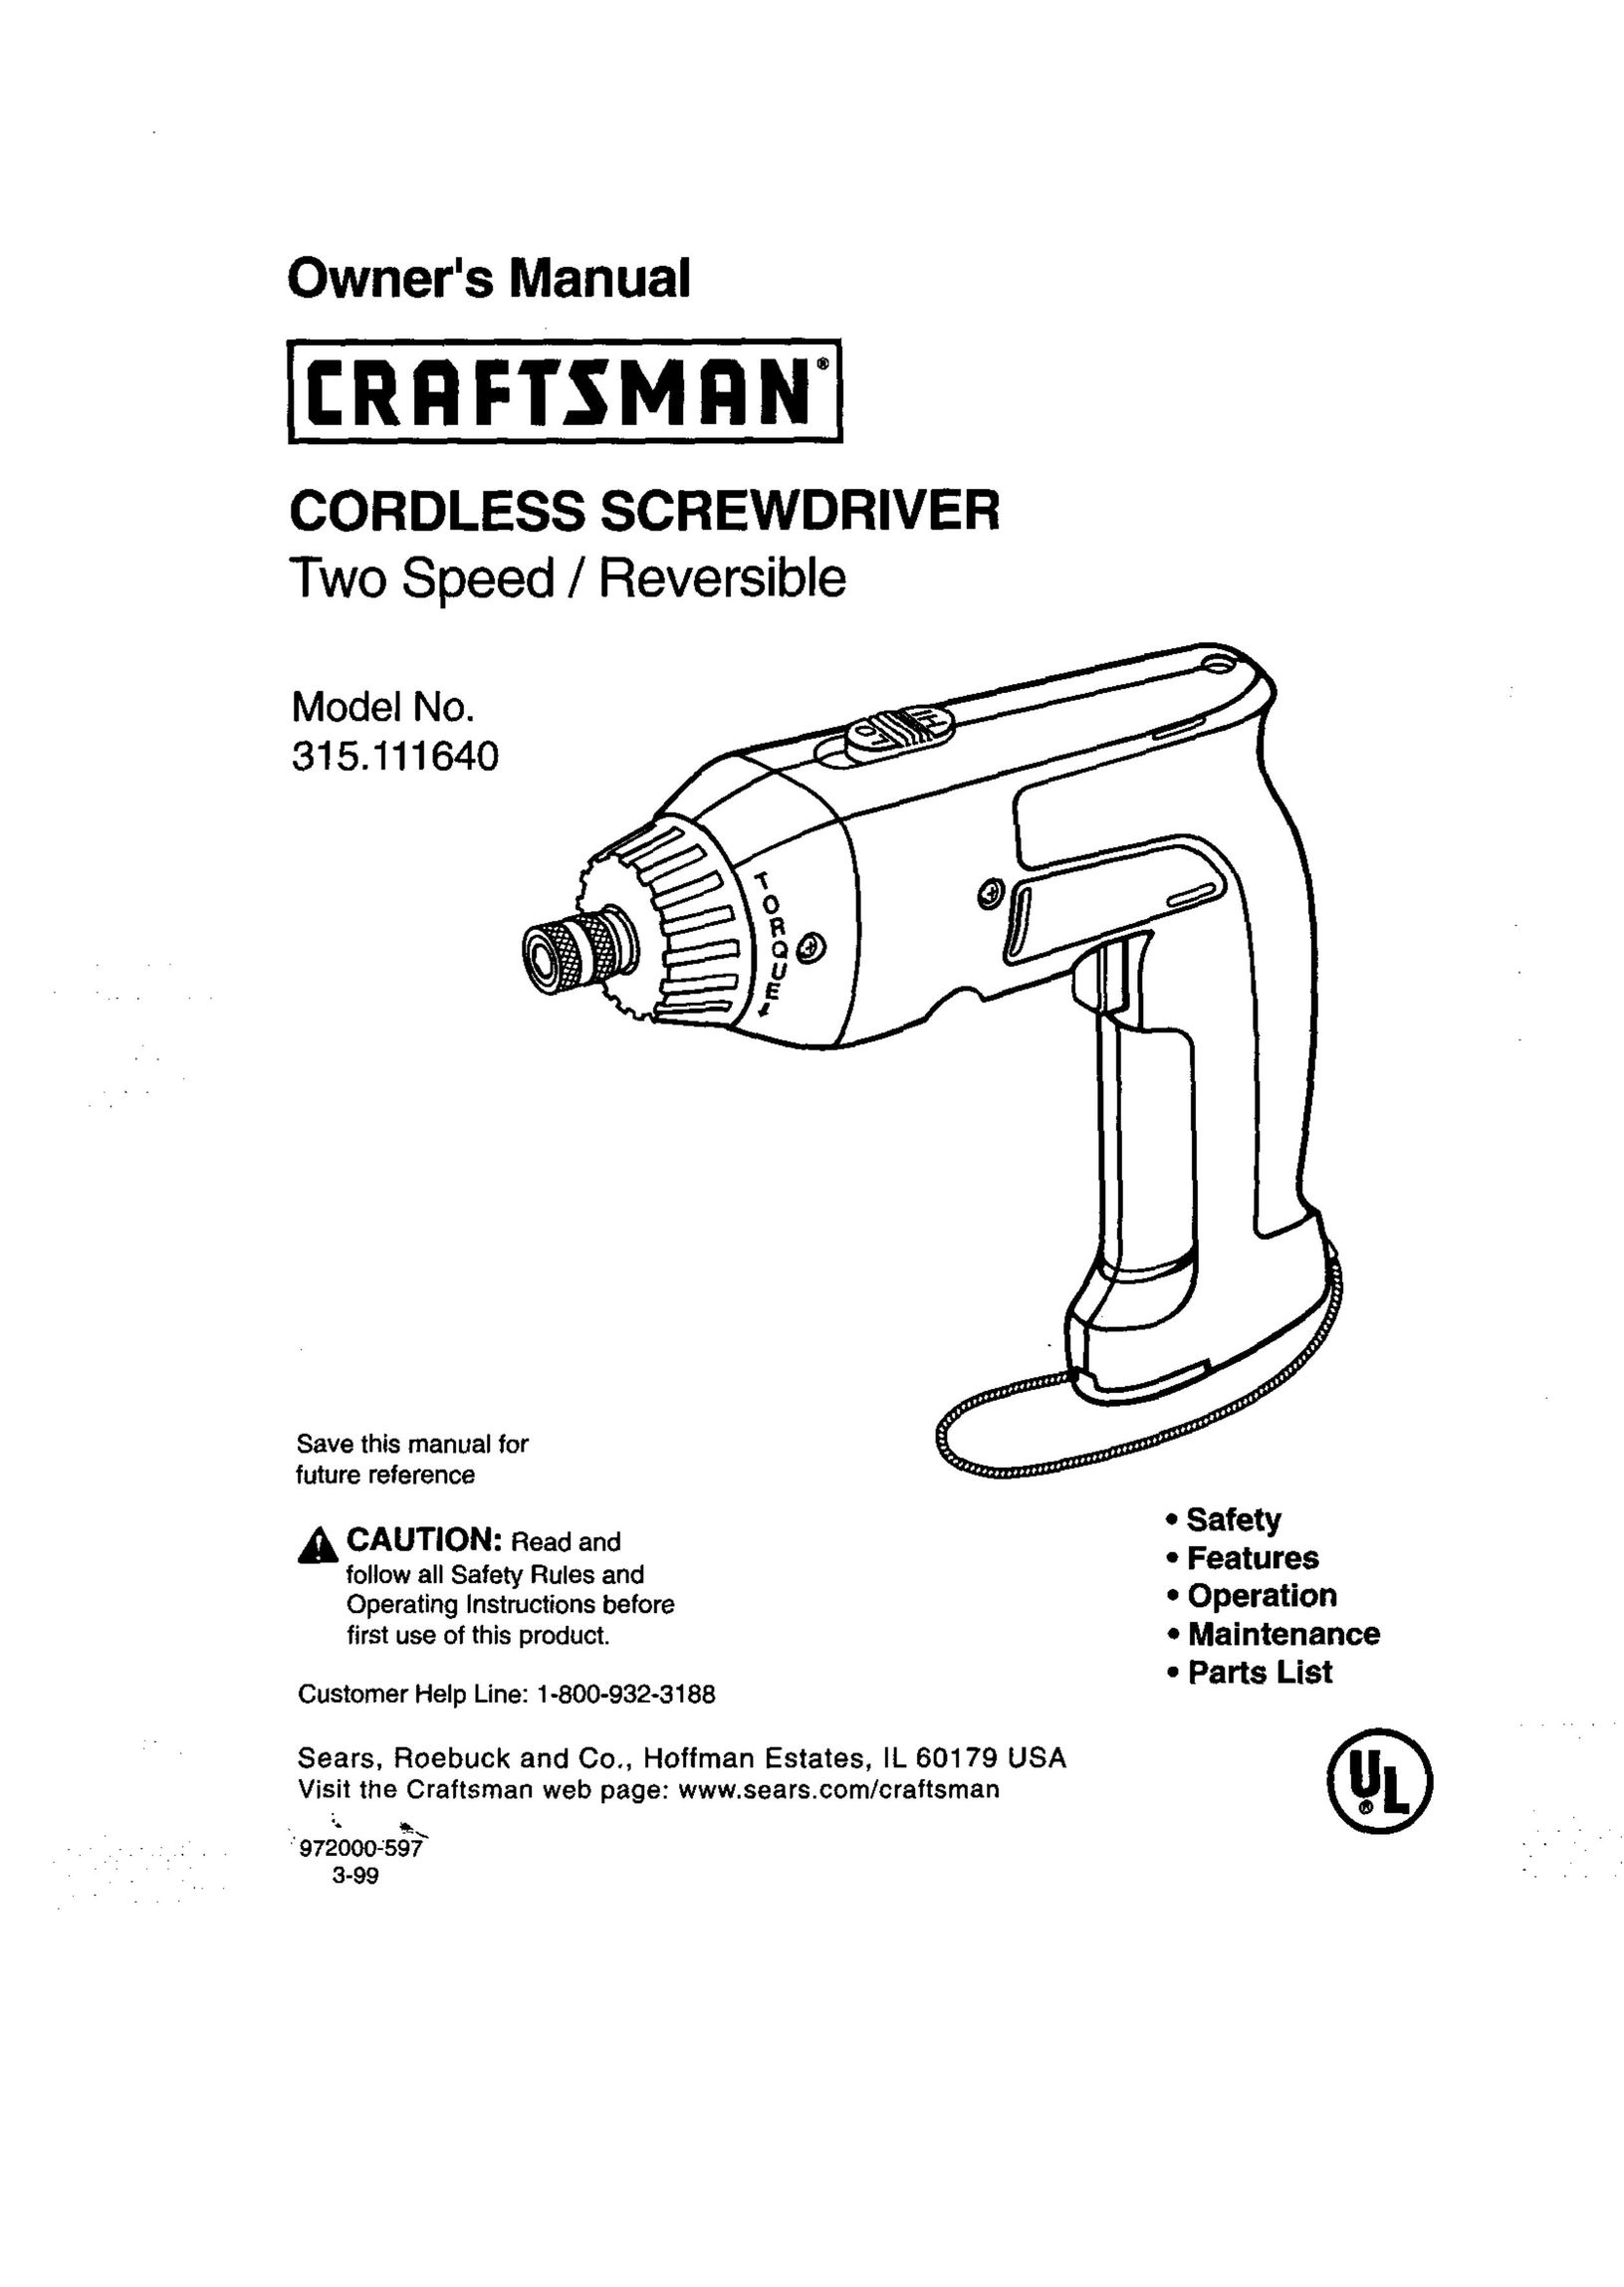 Craftsman 315.111640 Power Screwdriver User Manual